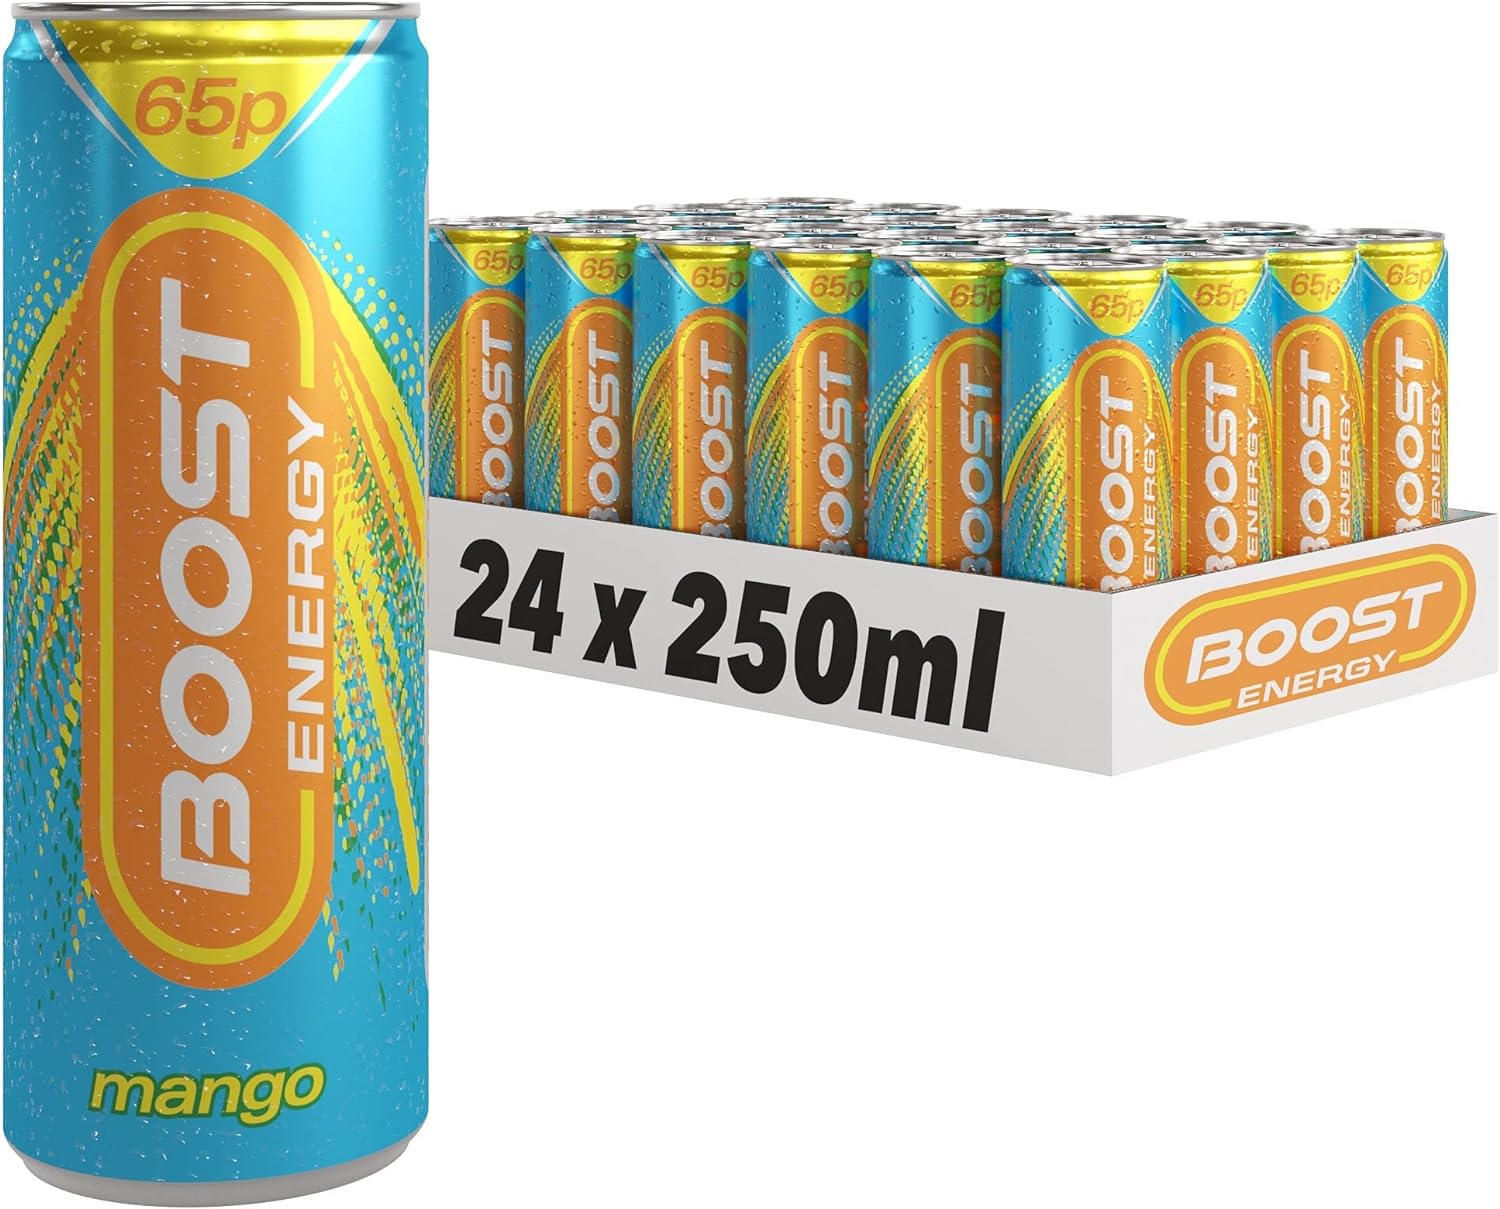 Boost Energy Drink Mango - 250ml - Case of 24